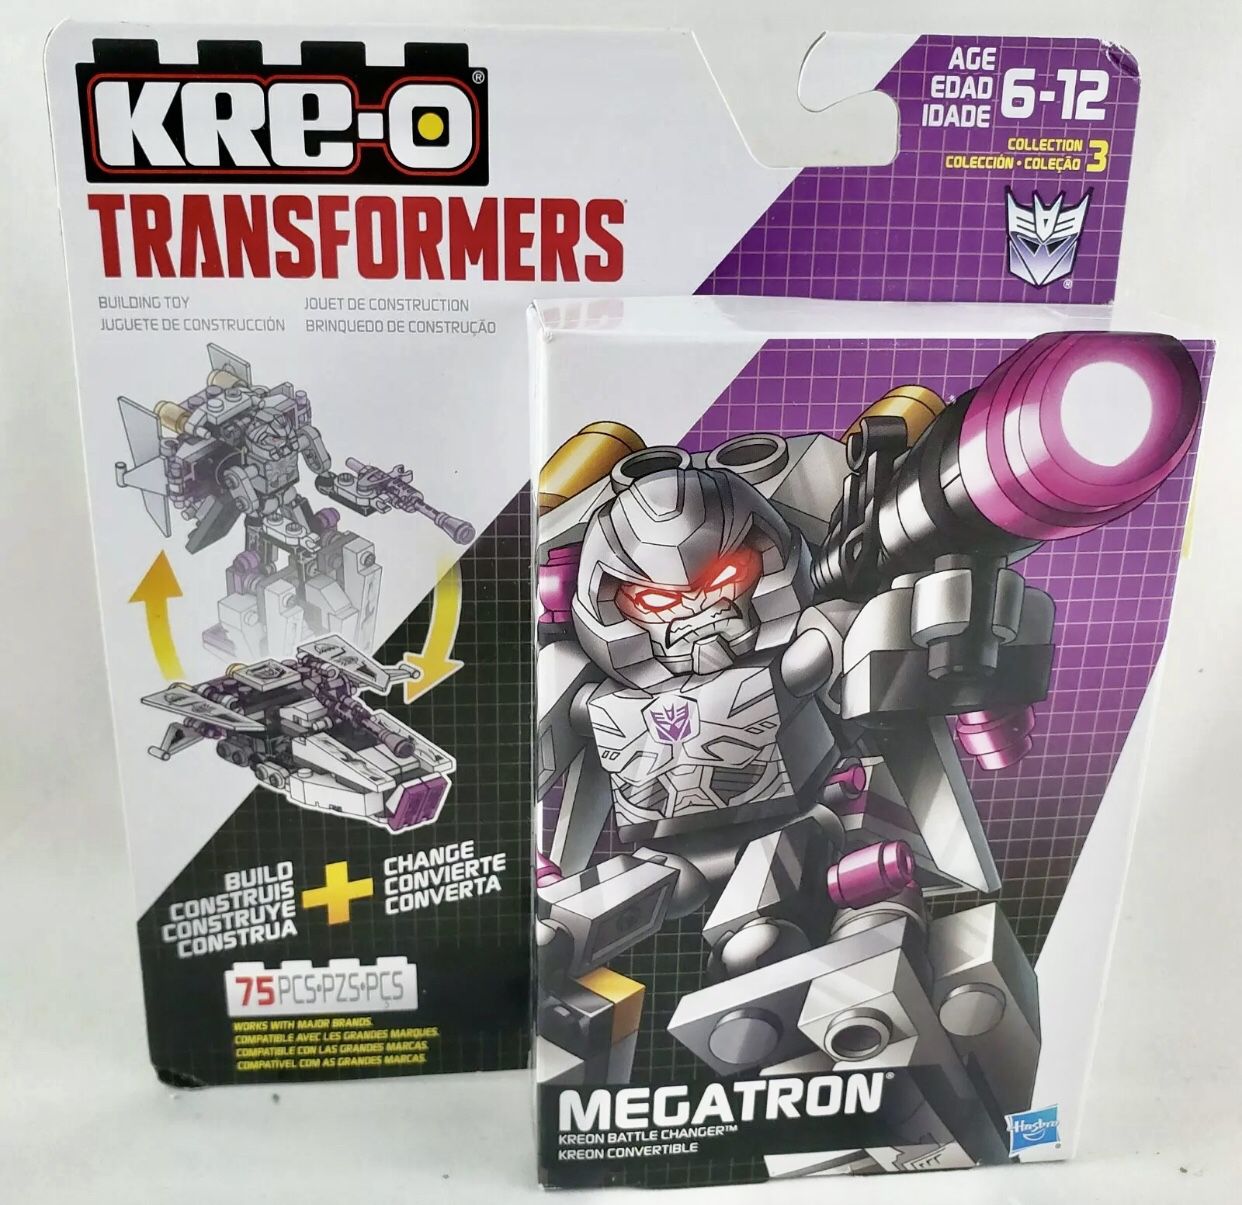 KRE-O Transformers Battle Changers MEGATRON 75 PC Building Kit New In Box